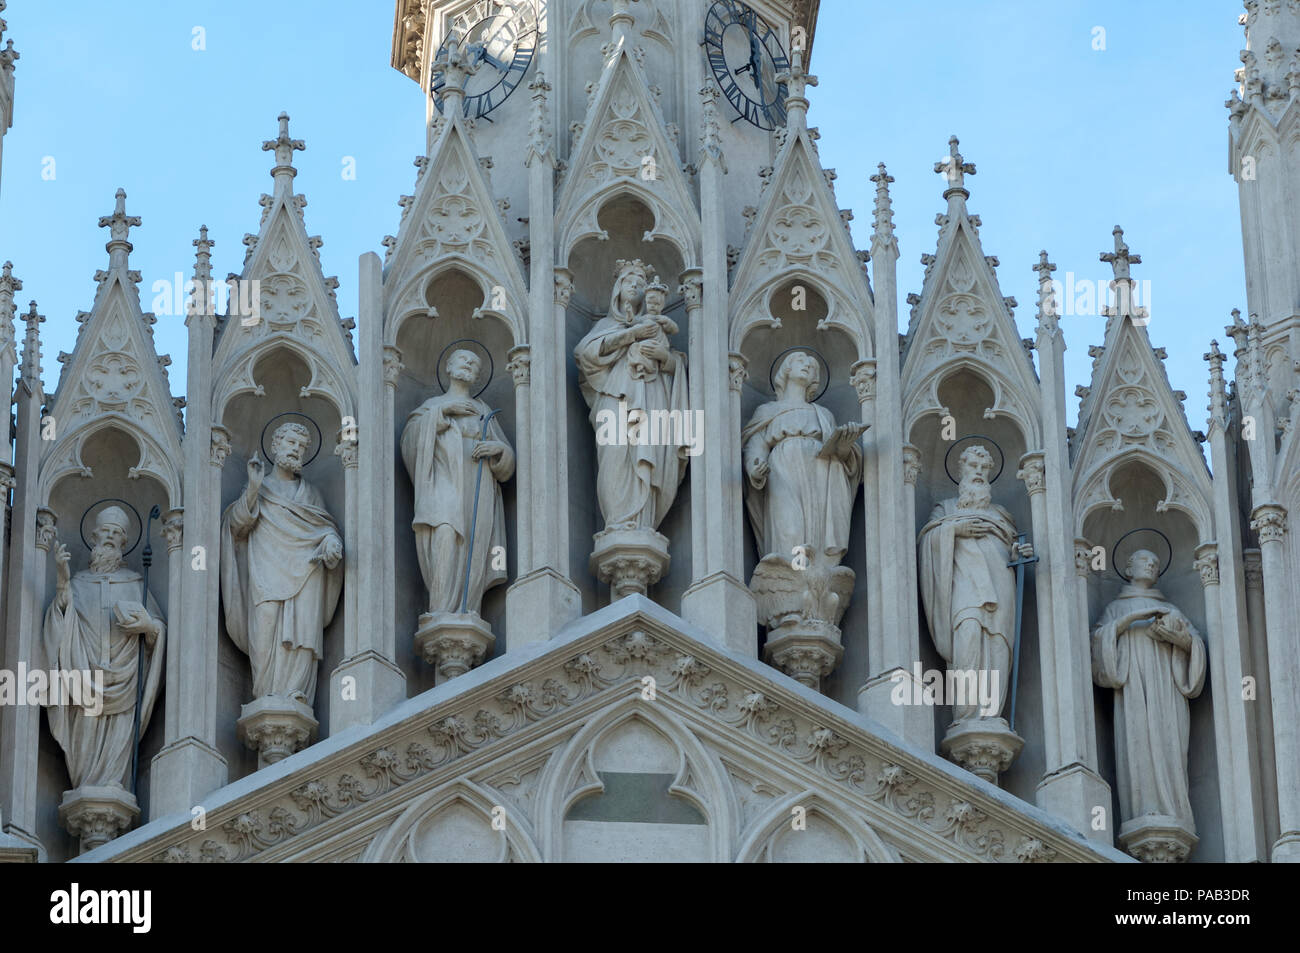 Facade detail of the Chiesa del Sacro Cuore del Suffragio (Church of the Sacred Heart) in Rome, Stock Photo